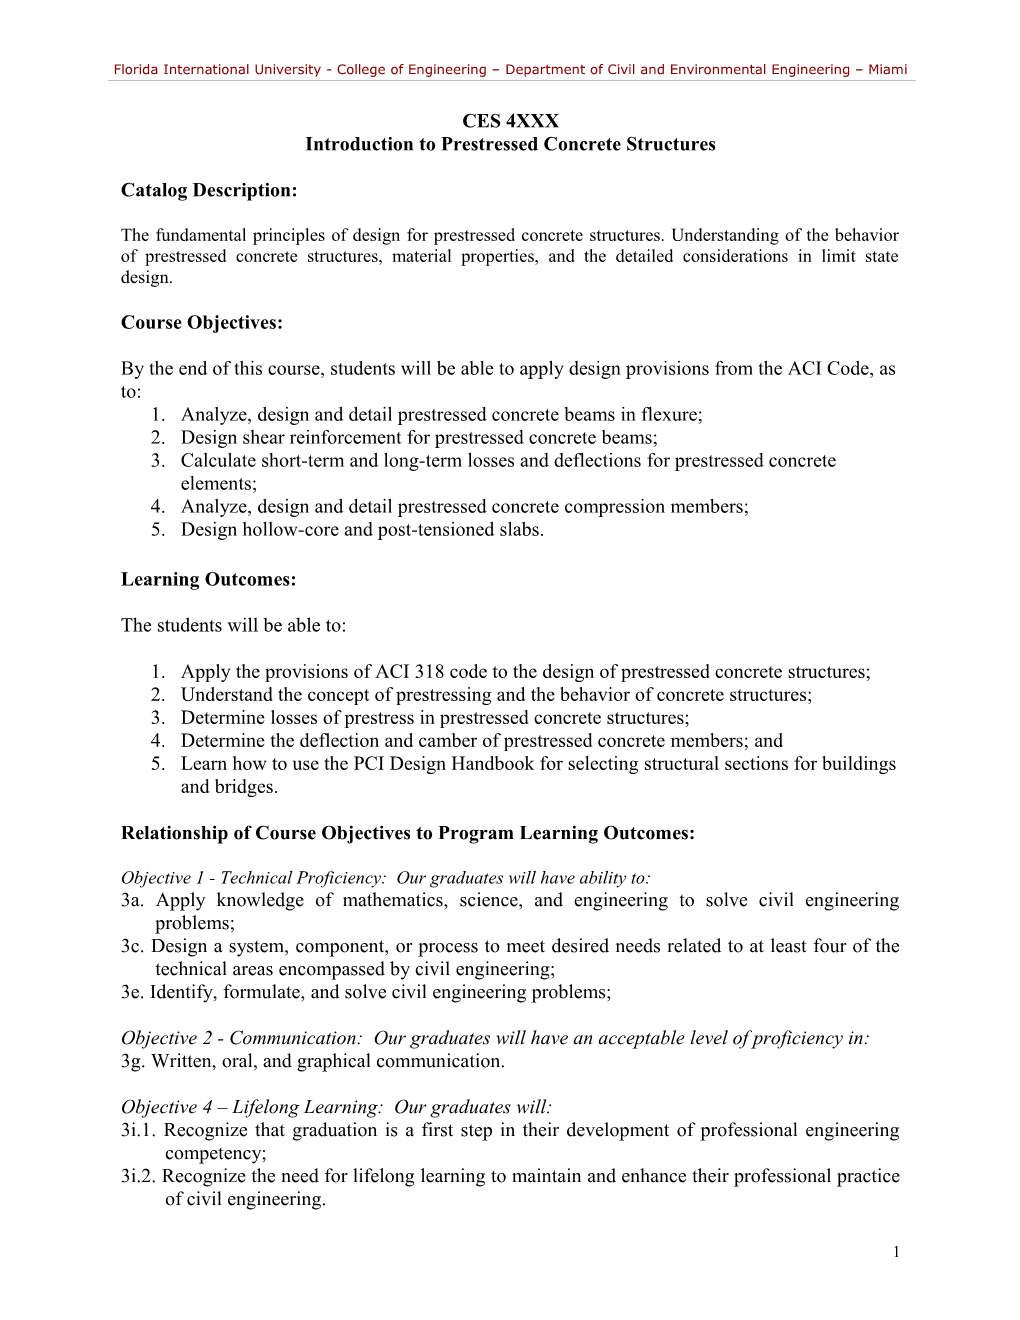 FIU COE Course Summary Form